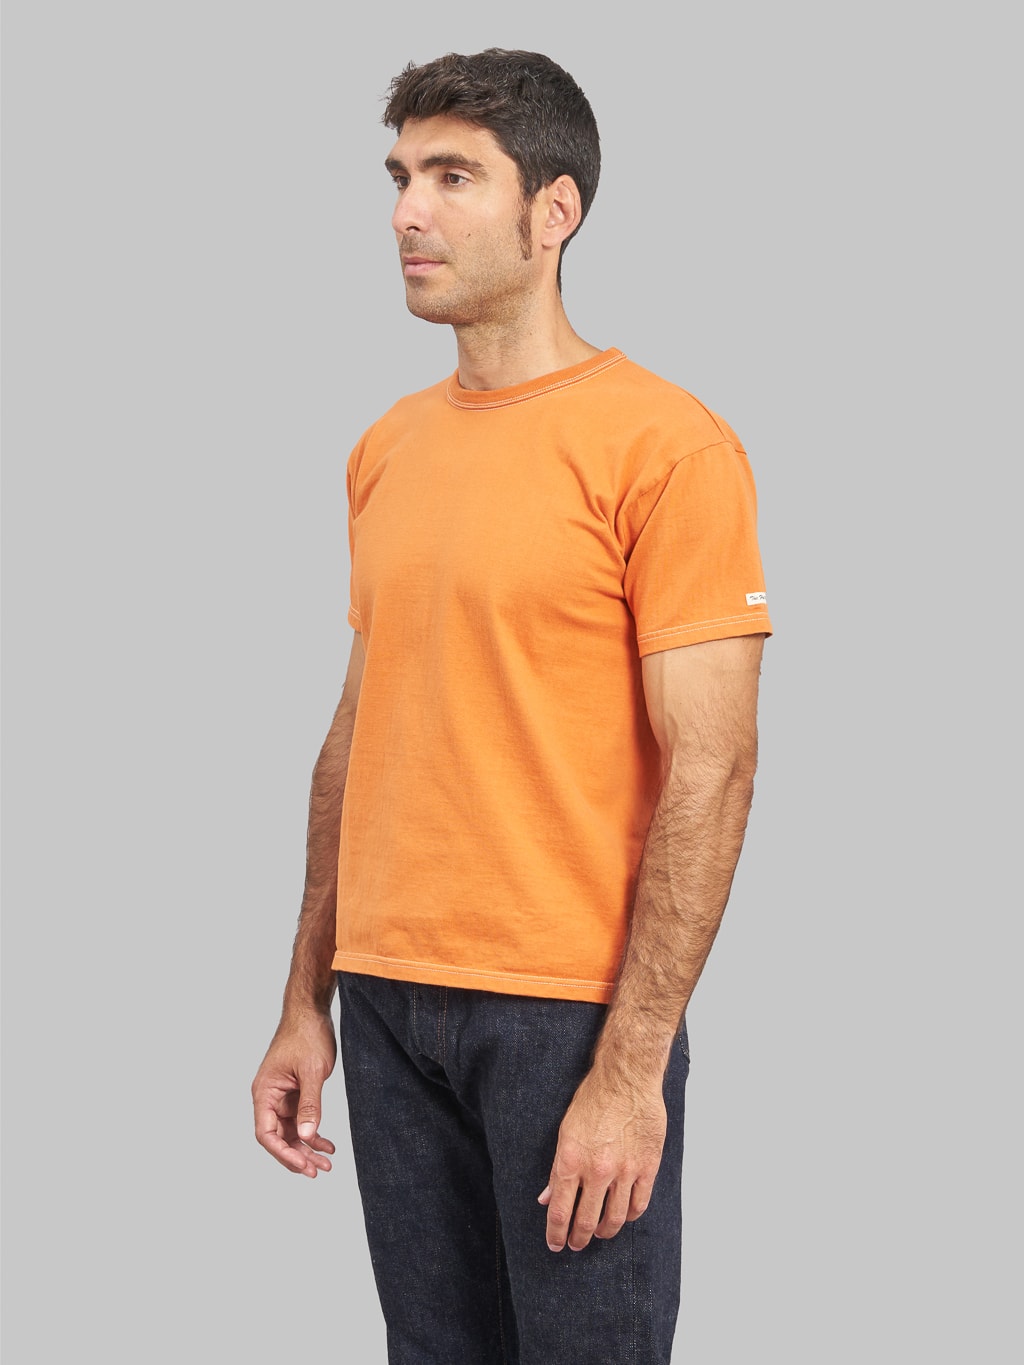 The Flat Head Loopwheeled Heavyweight Plain TShirt Dark Orange model side fit